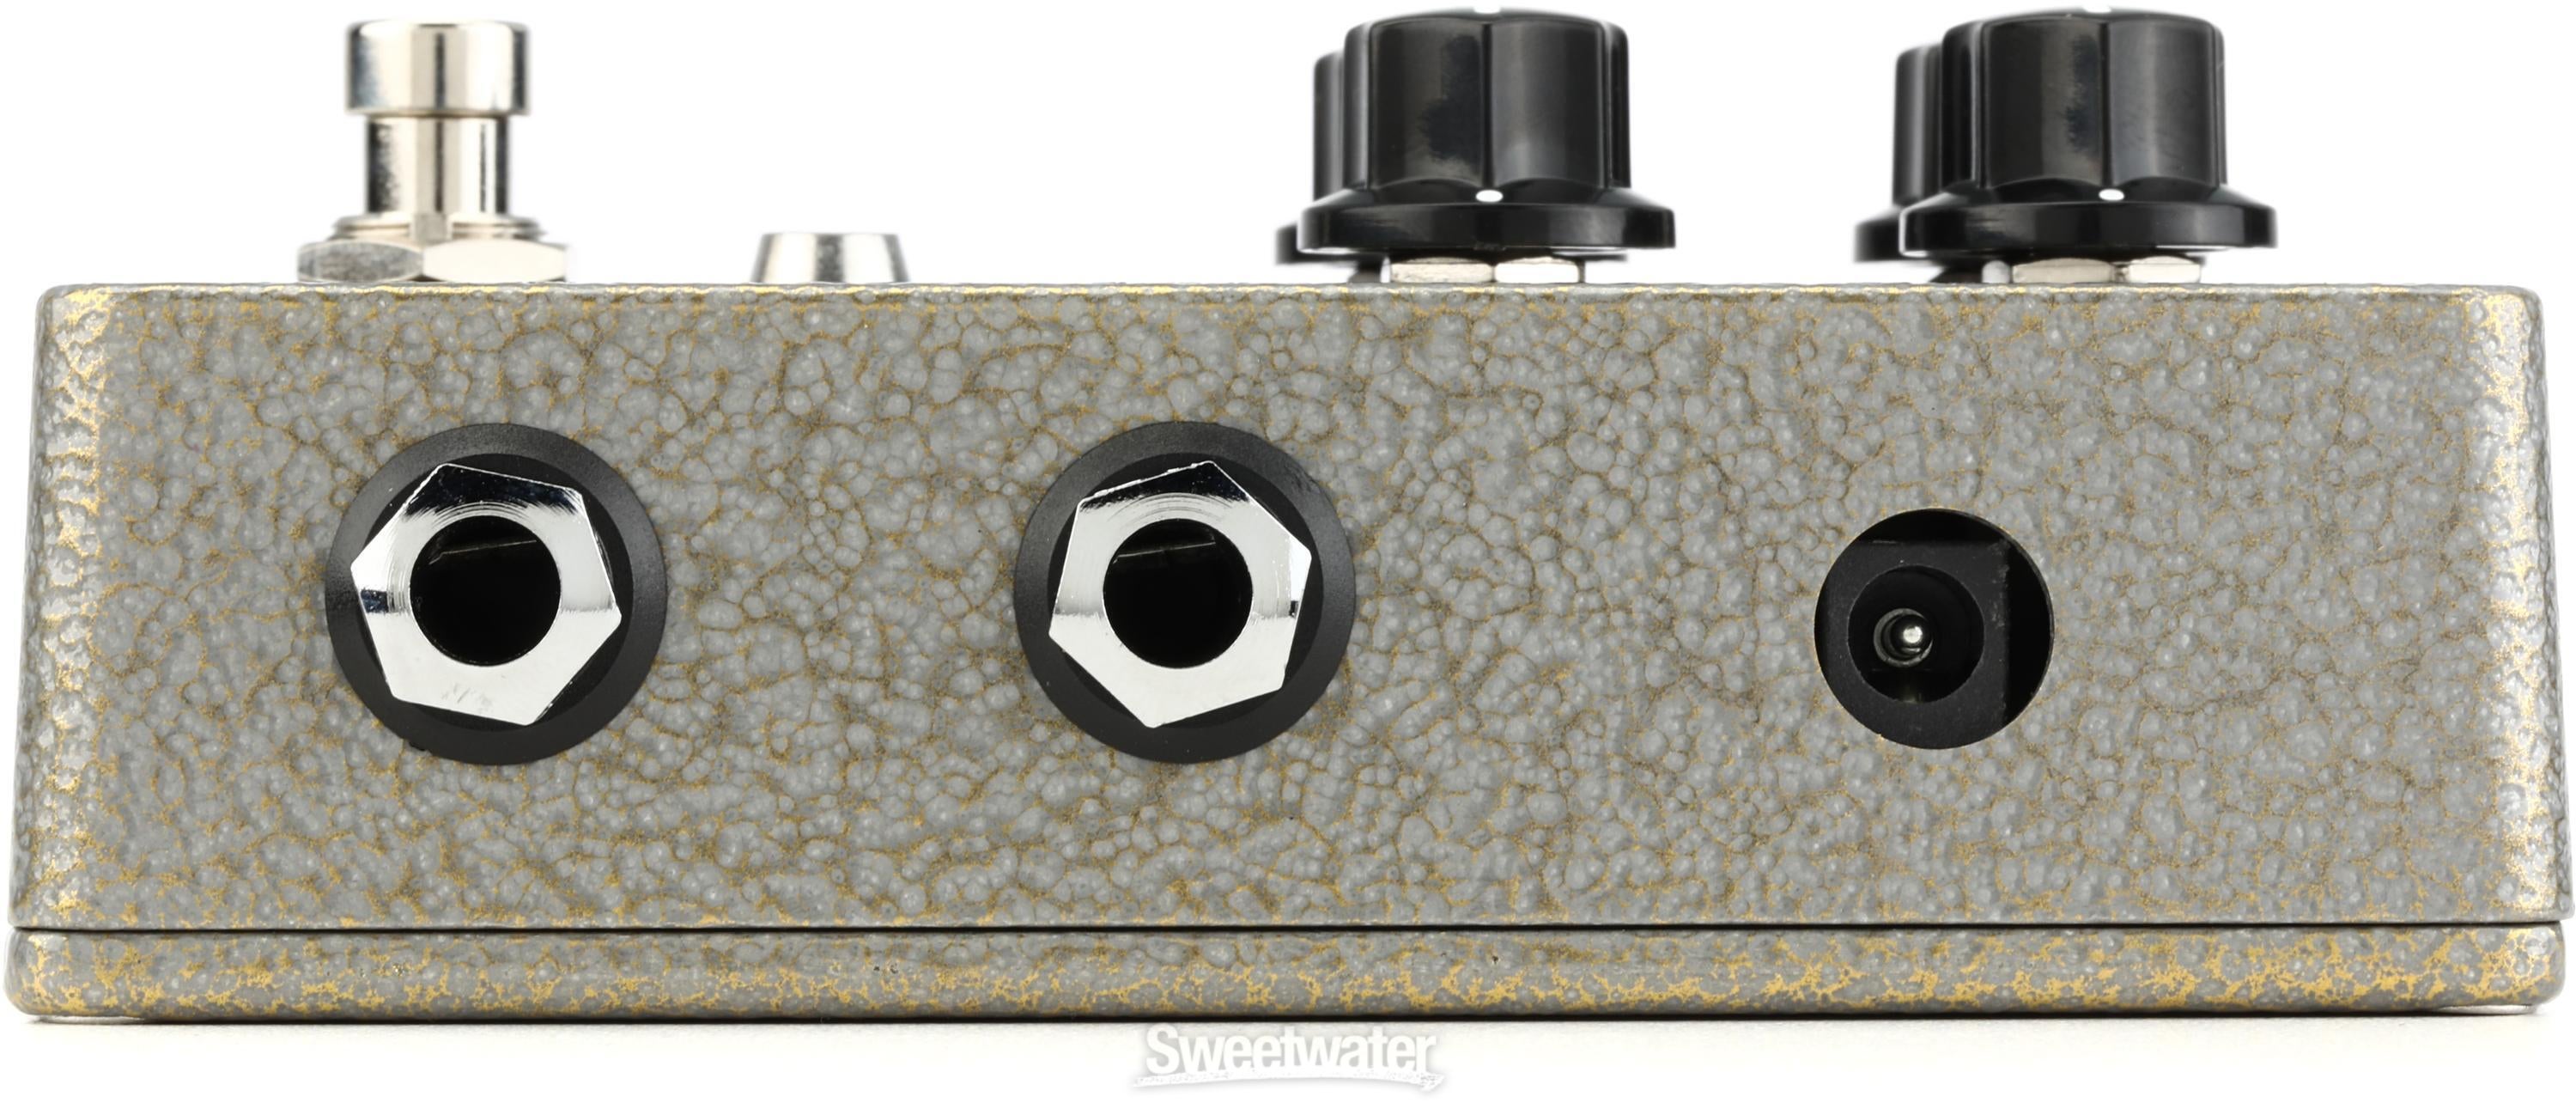 Benson Amps Stonk Box Temperature-controlled Fuzz Pedal